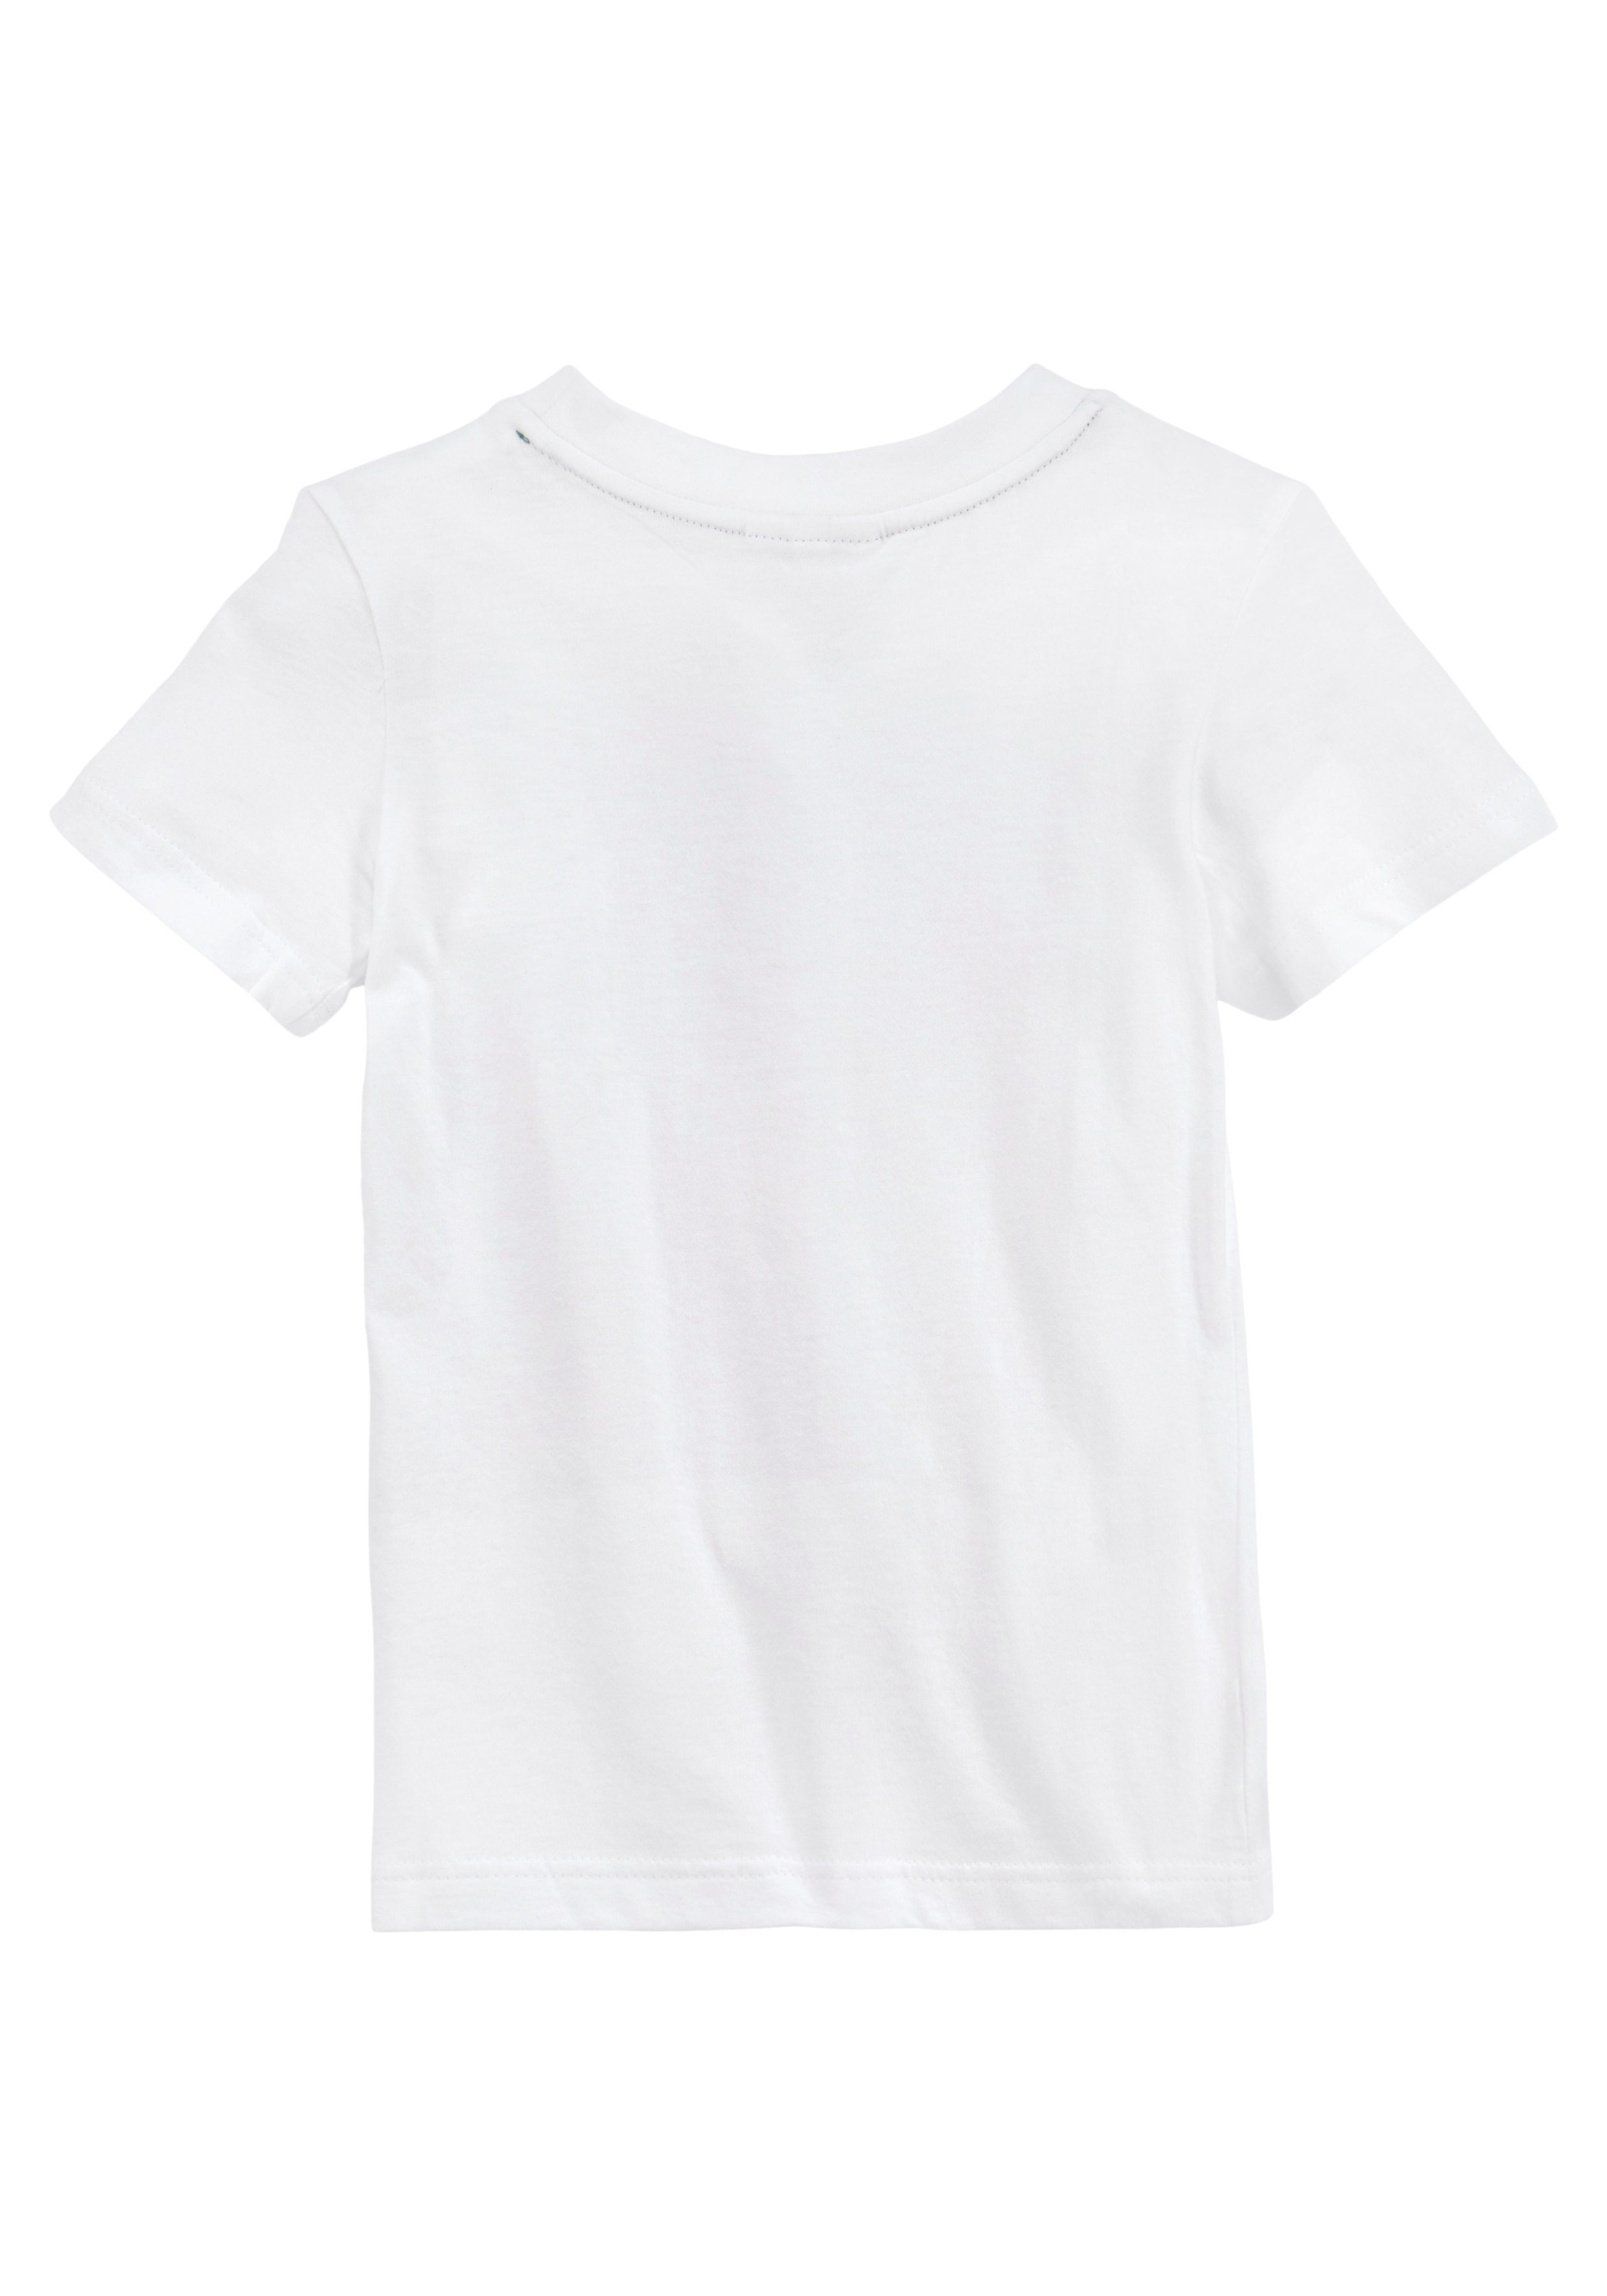 Lacoste auf T-Shirt mit Brusthöhe Lacoste-Krokodil WHITE